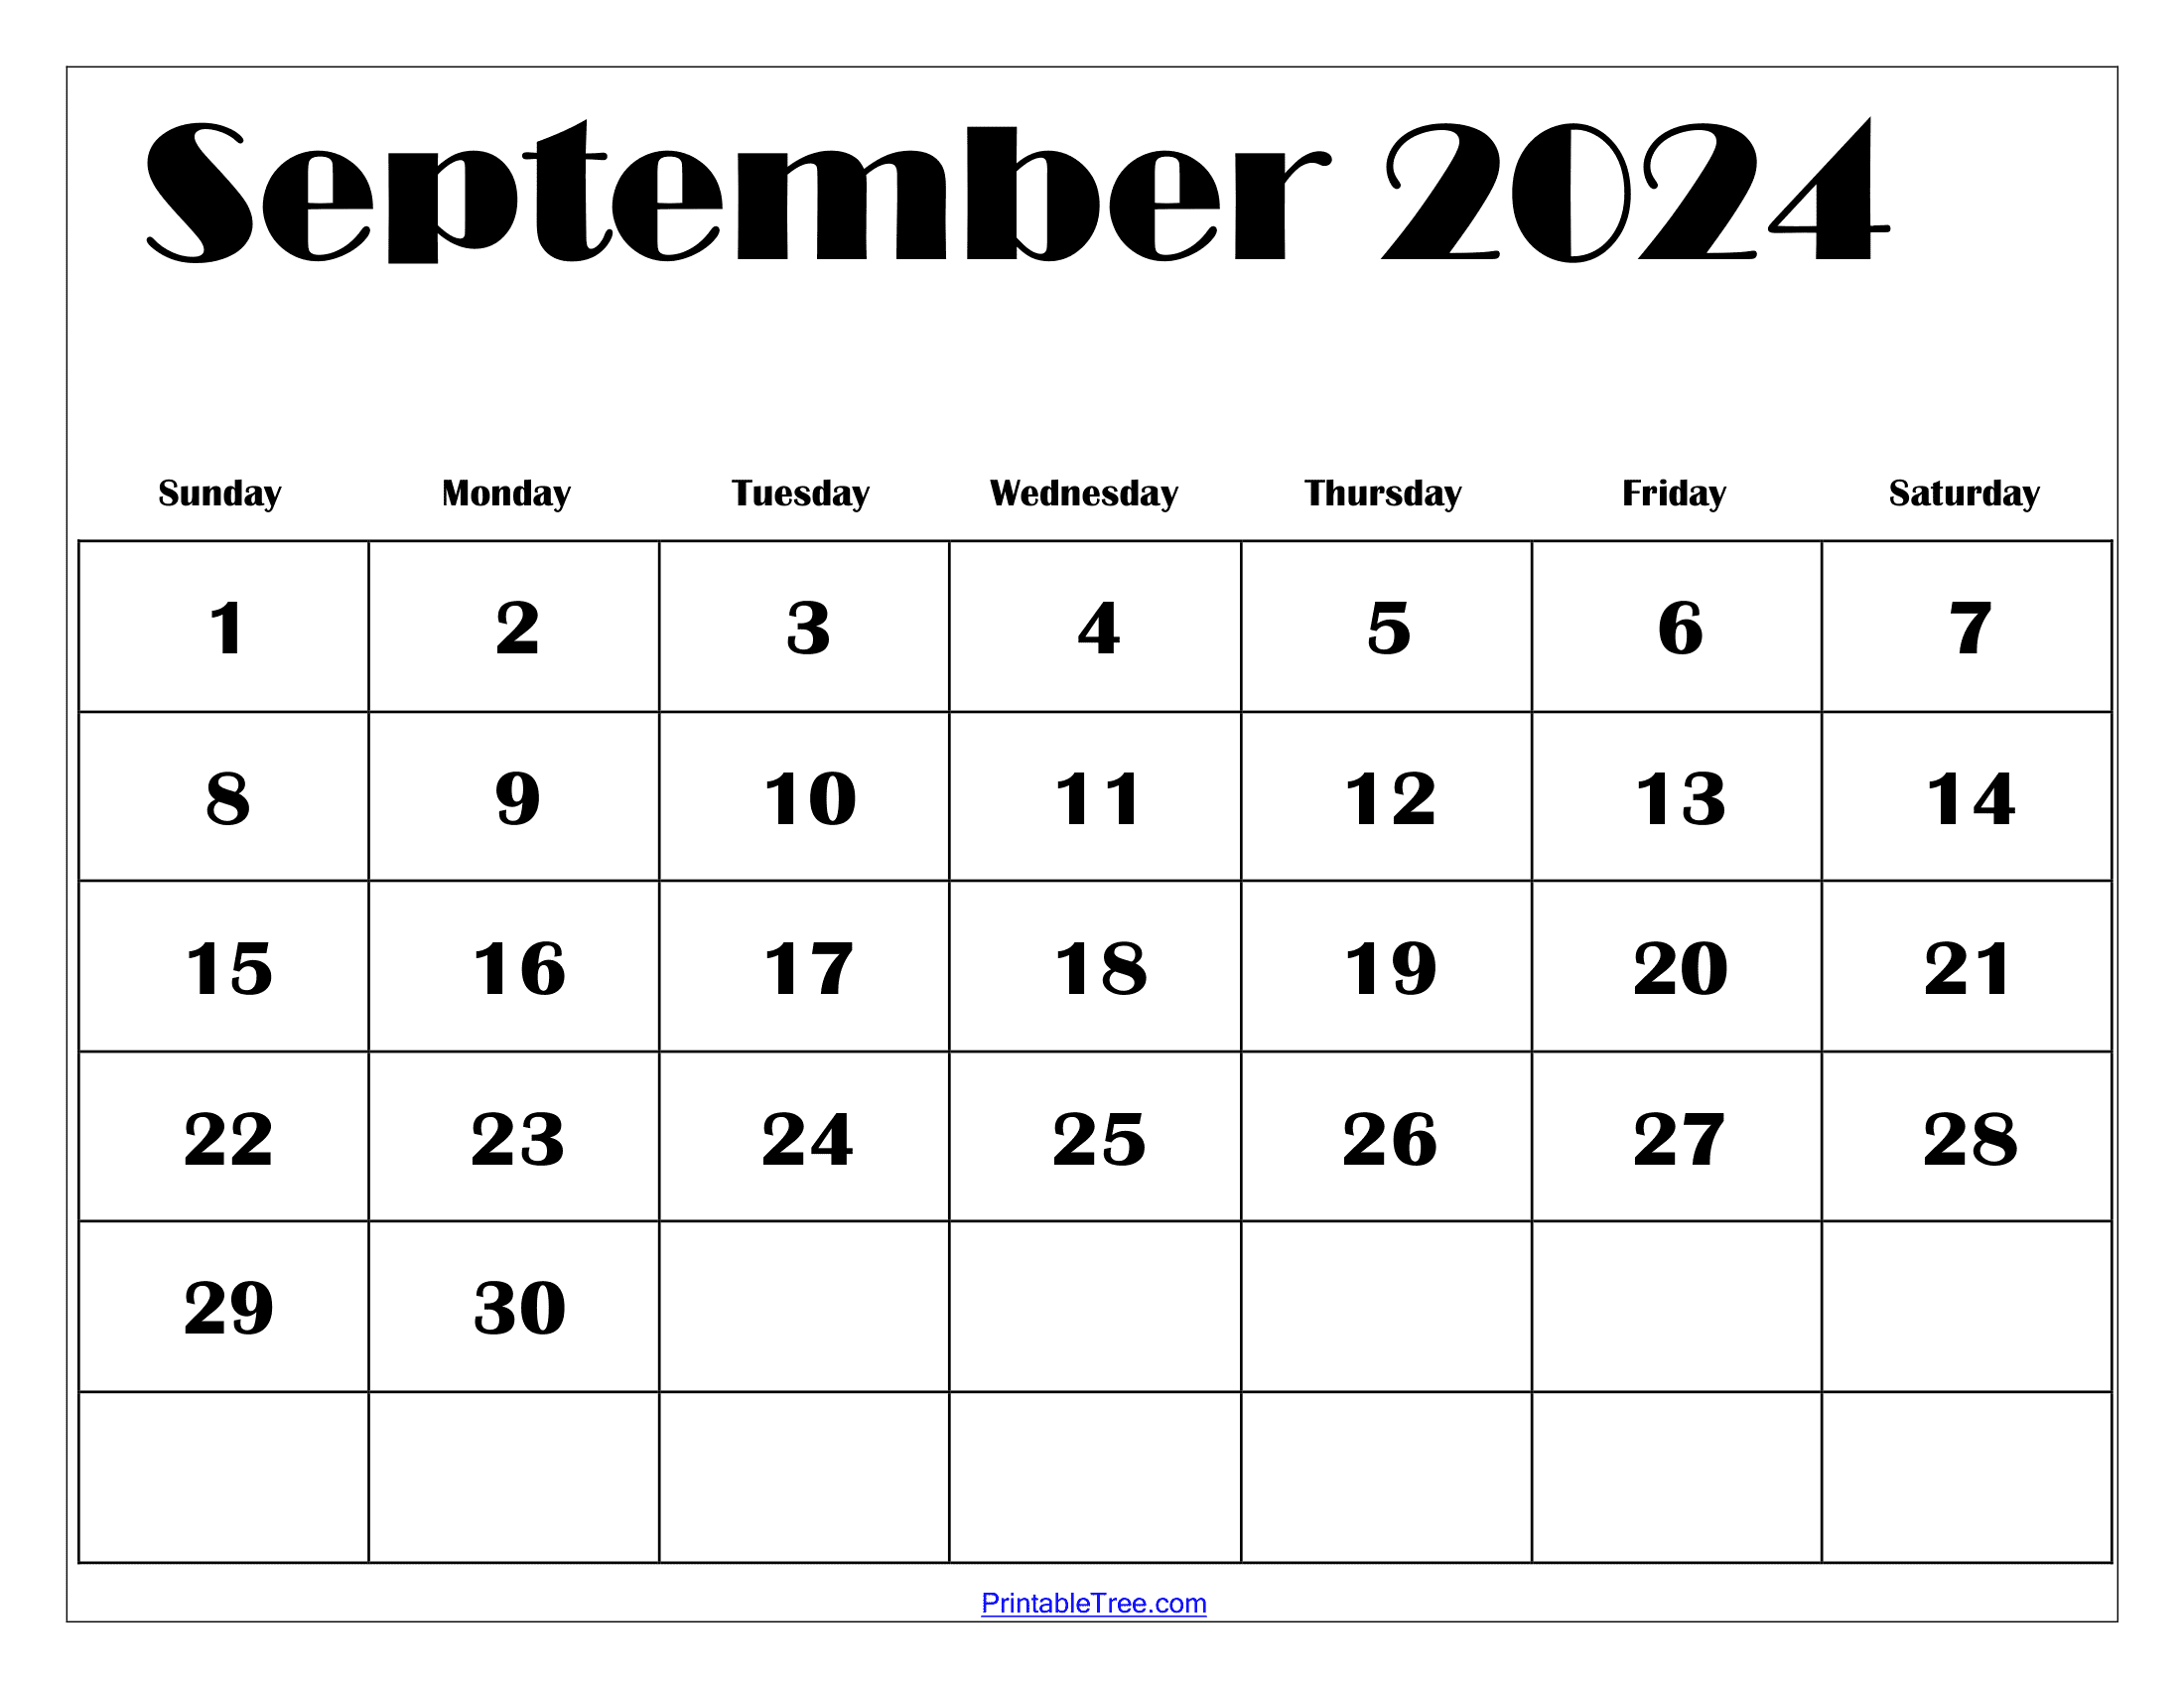 September 2024 Calendar Printable Pdf With Holidays for 2024 September Calendar Printable